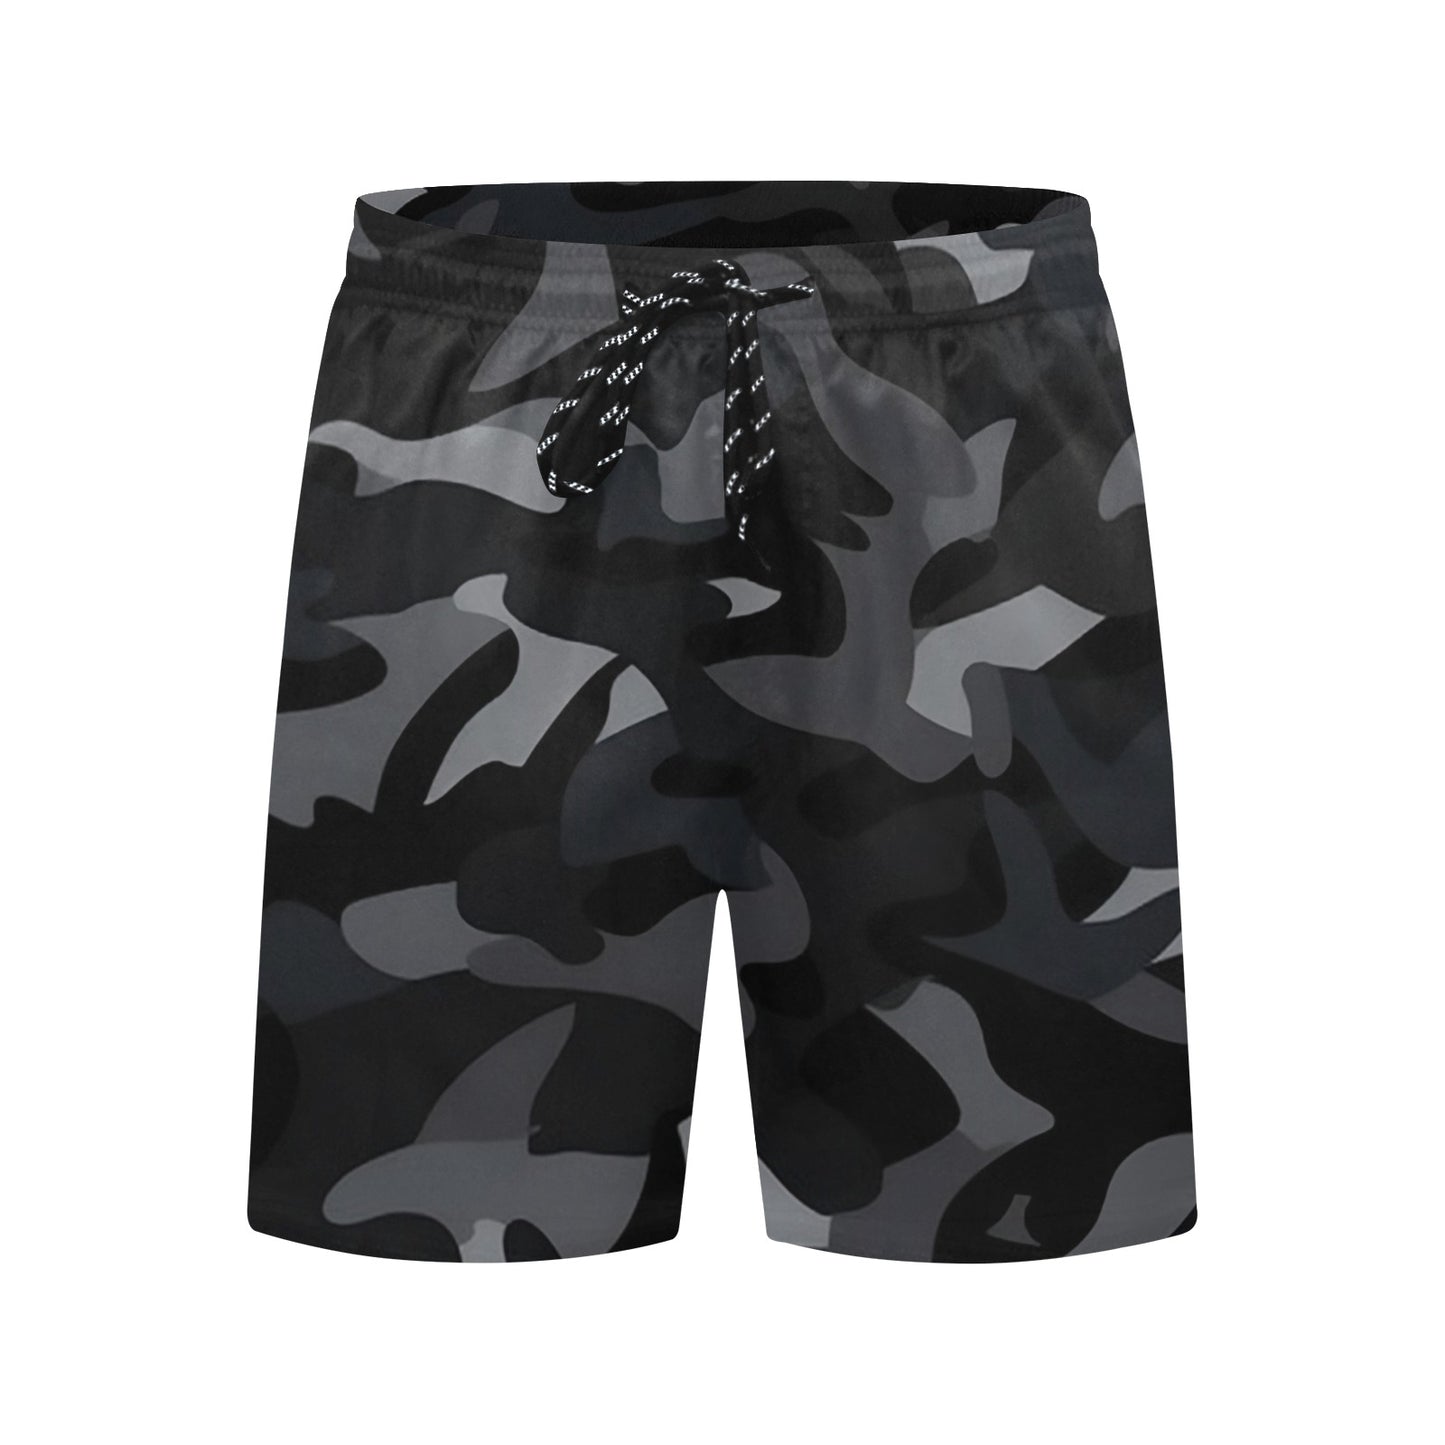 Black Camo Men Swim Trunks, 7" Inseam Shorts Green Camouflage Beach Pockets Mesh Lining Drawstring Casual Bathing Suit Plus Size Swimwear